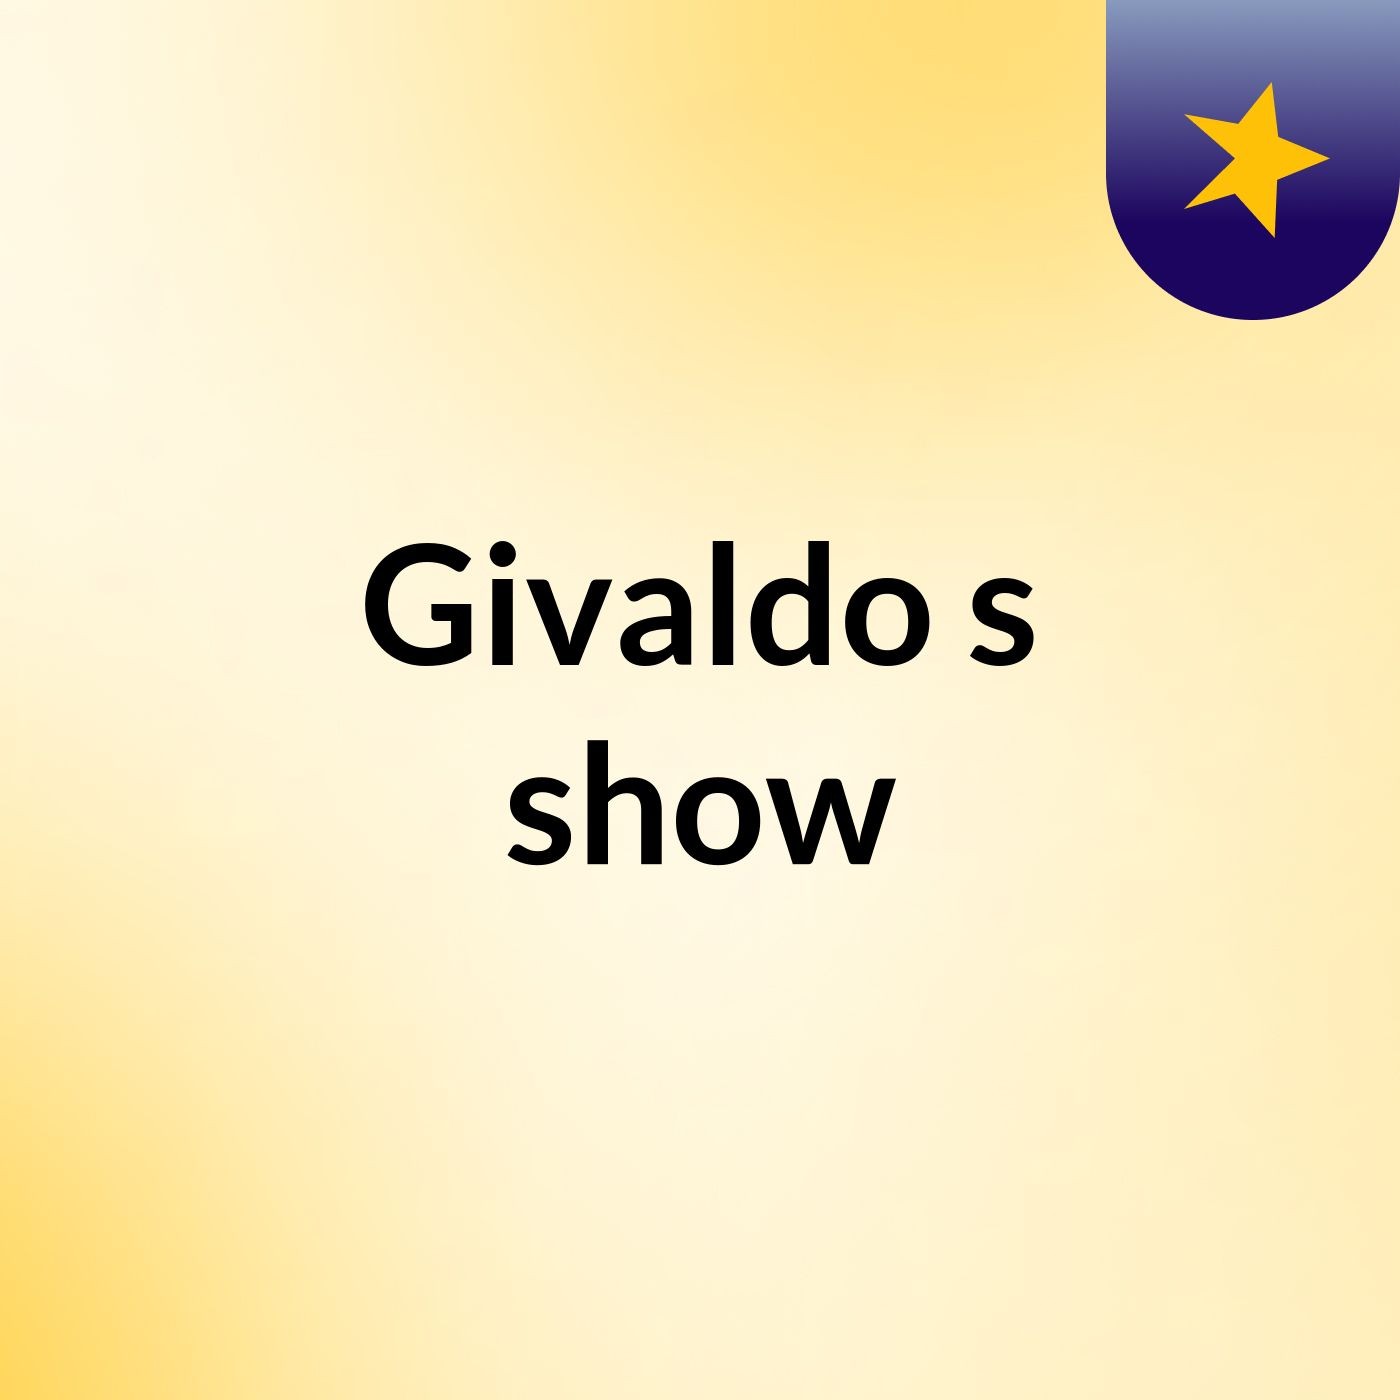 Givaldo's show